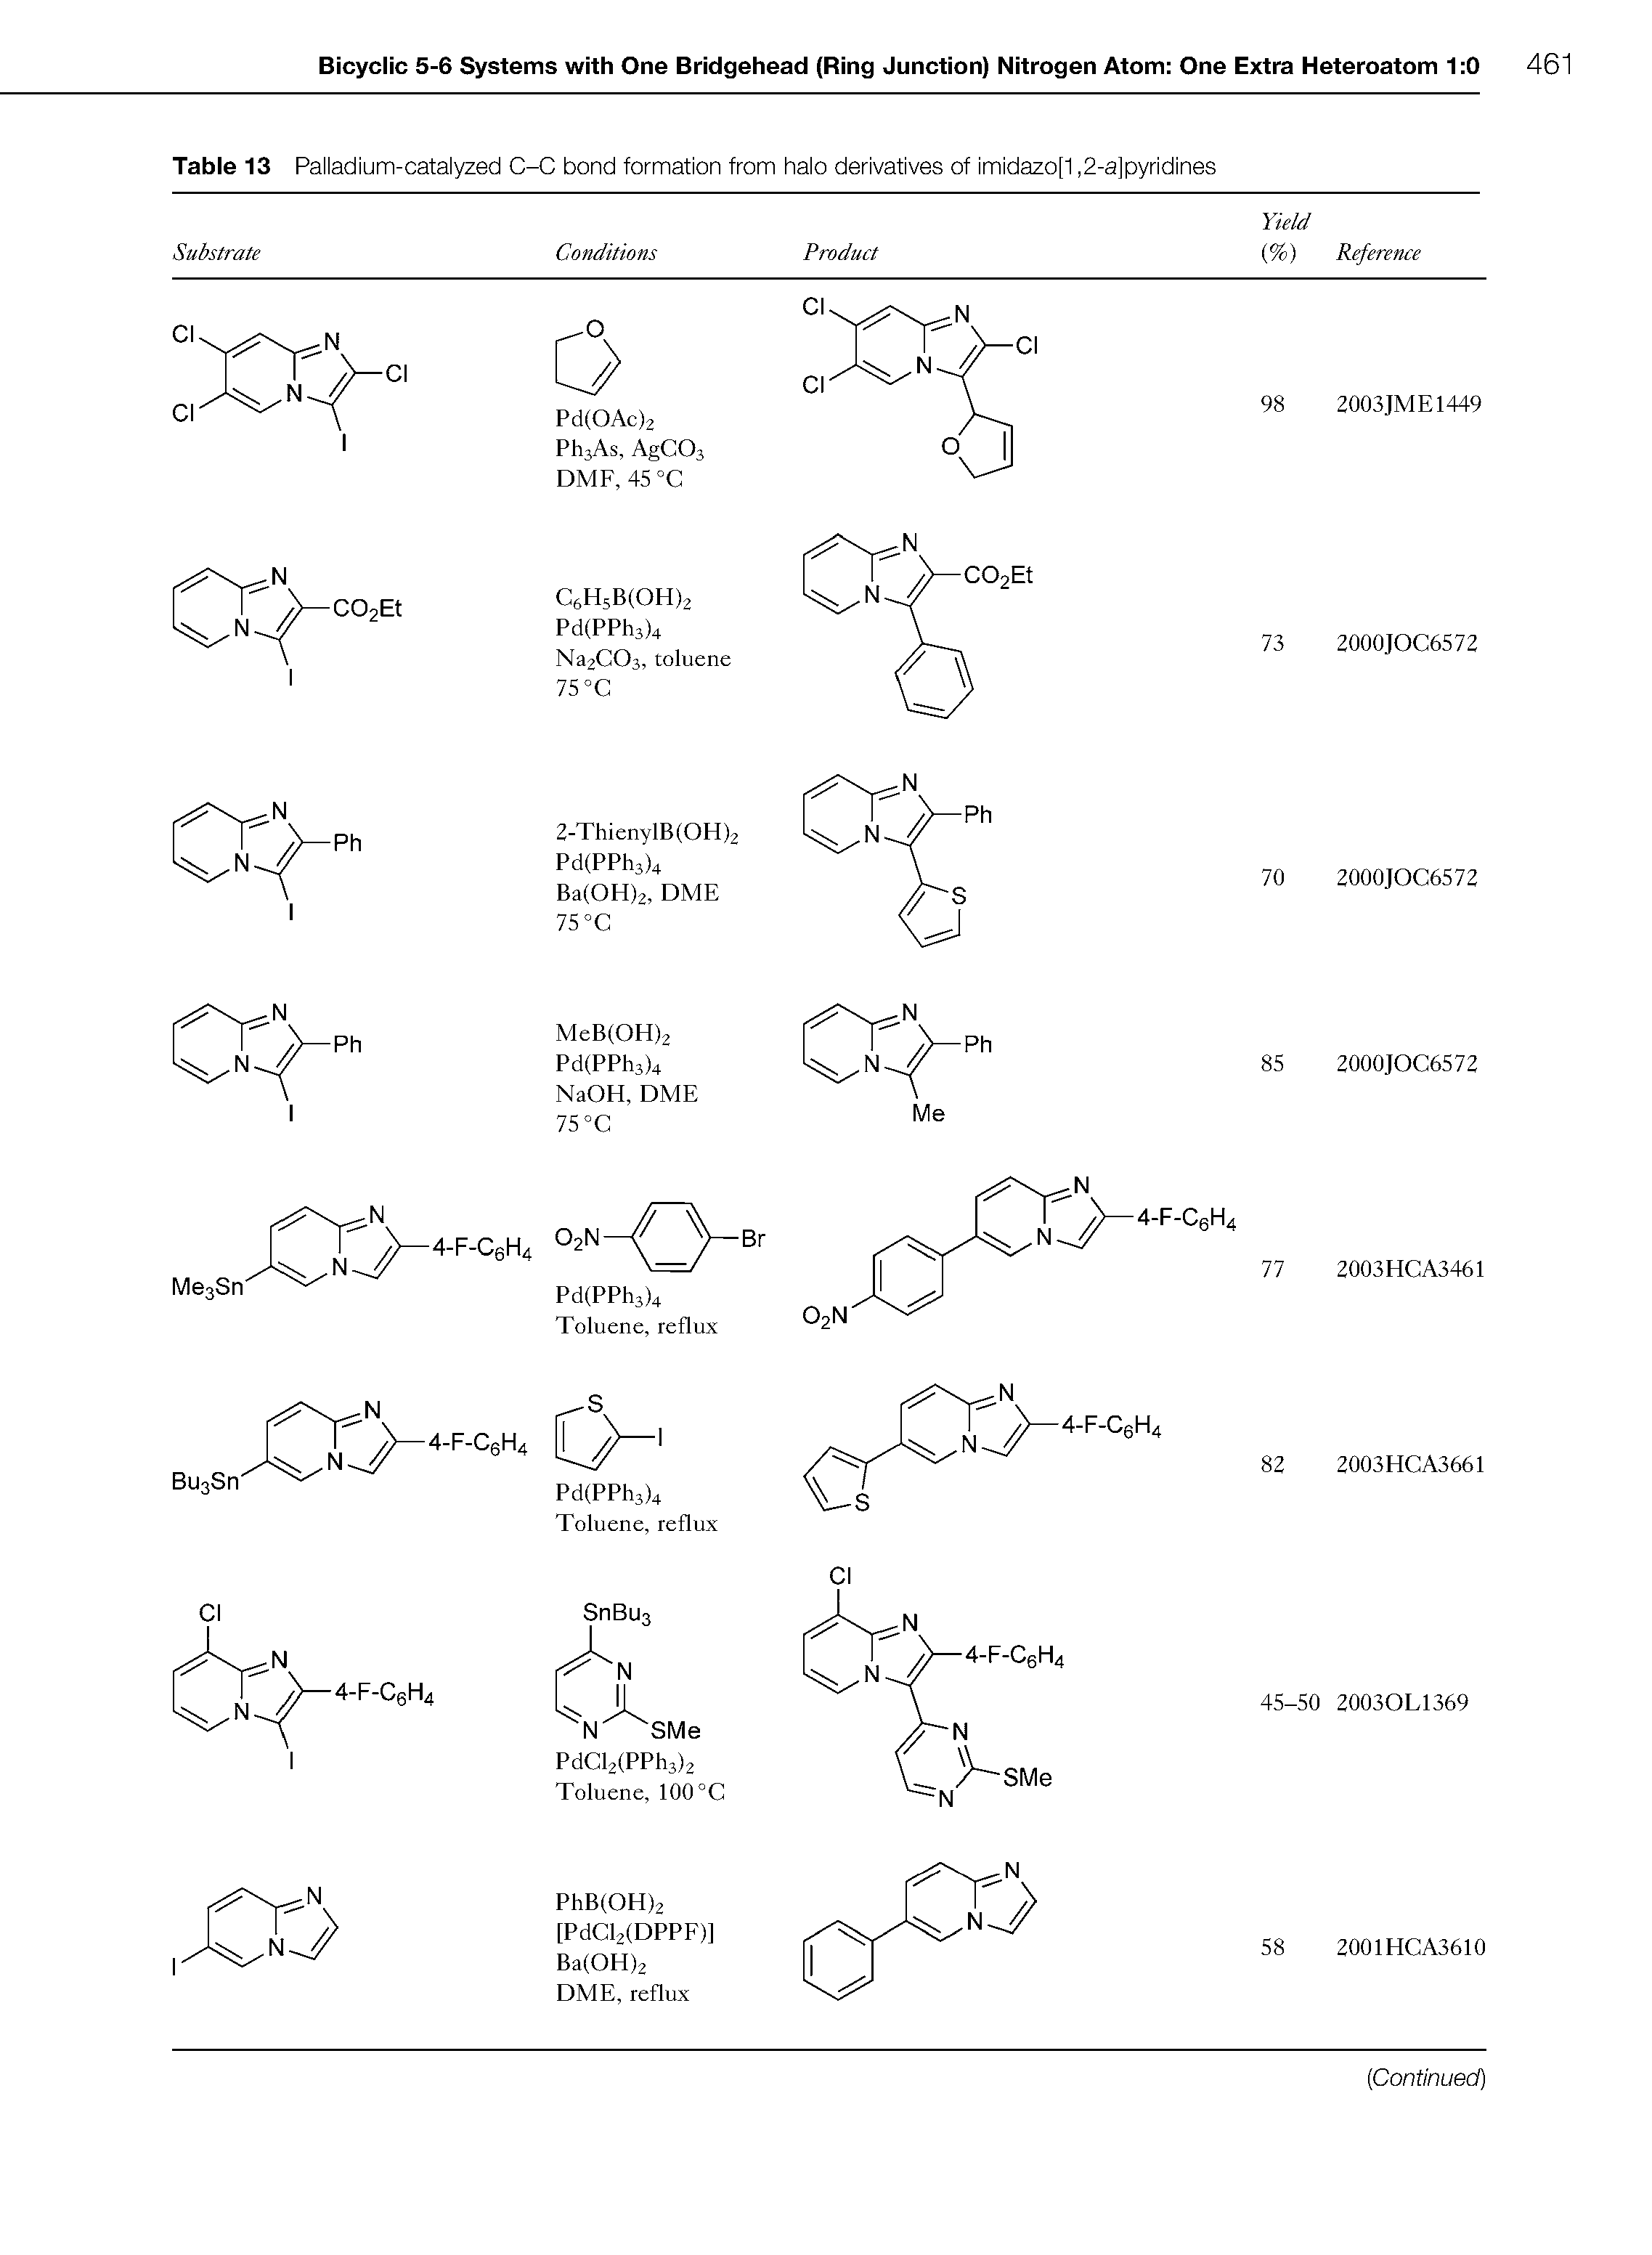 Table 13 Palladium-catalyzed C-C bond formation from halo derivatives of imidazo[1,2-a]pyridines...